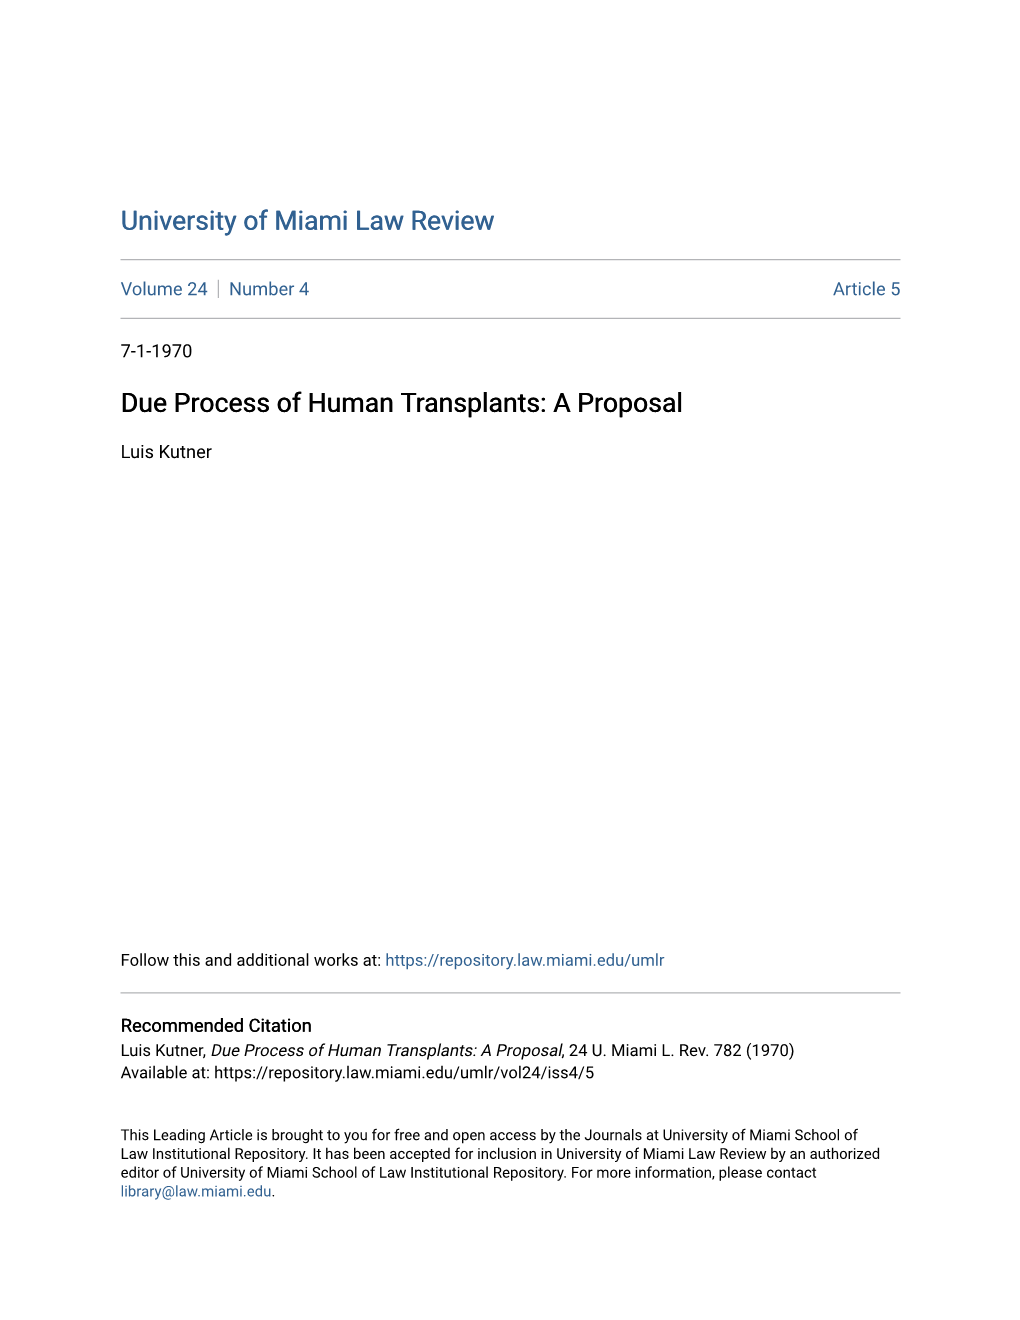 Due Process of Human Transplants: a Proposal